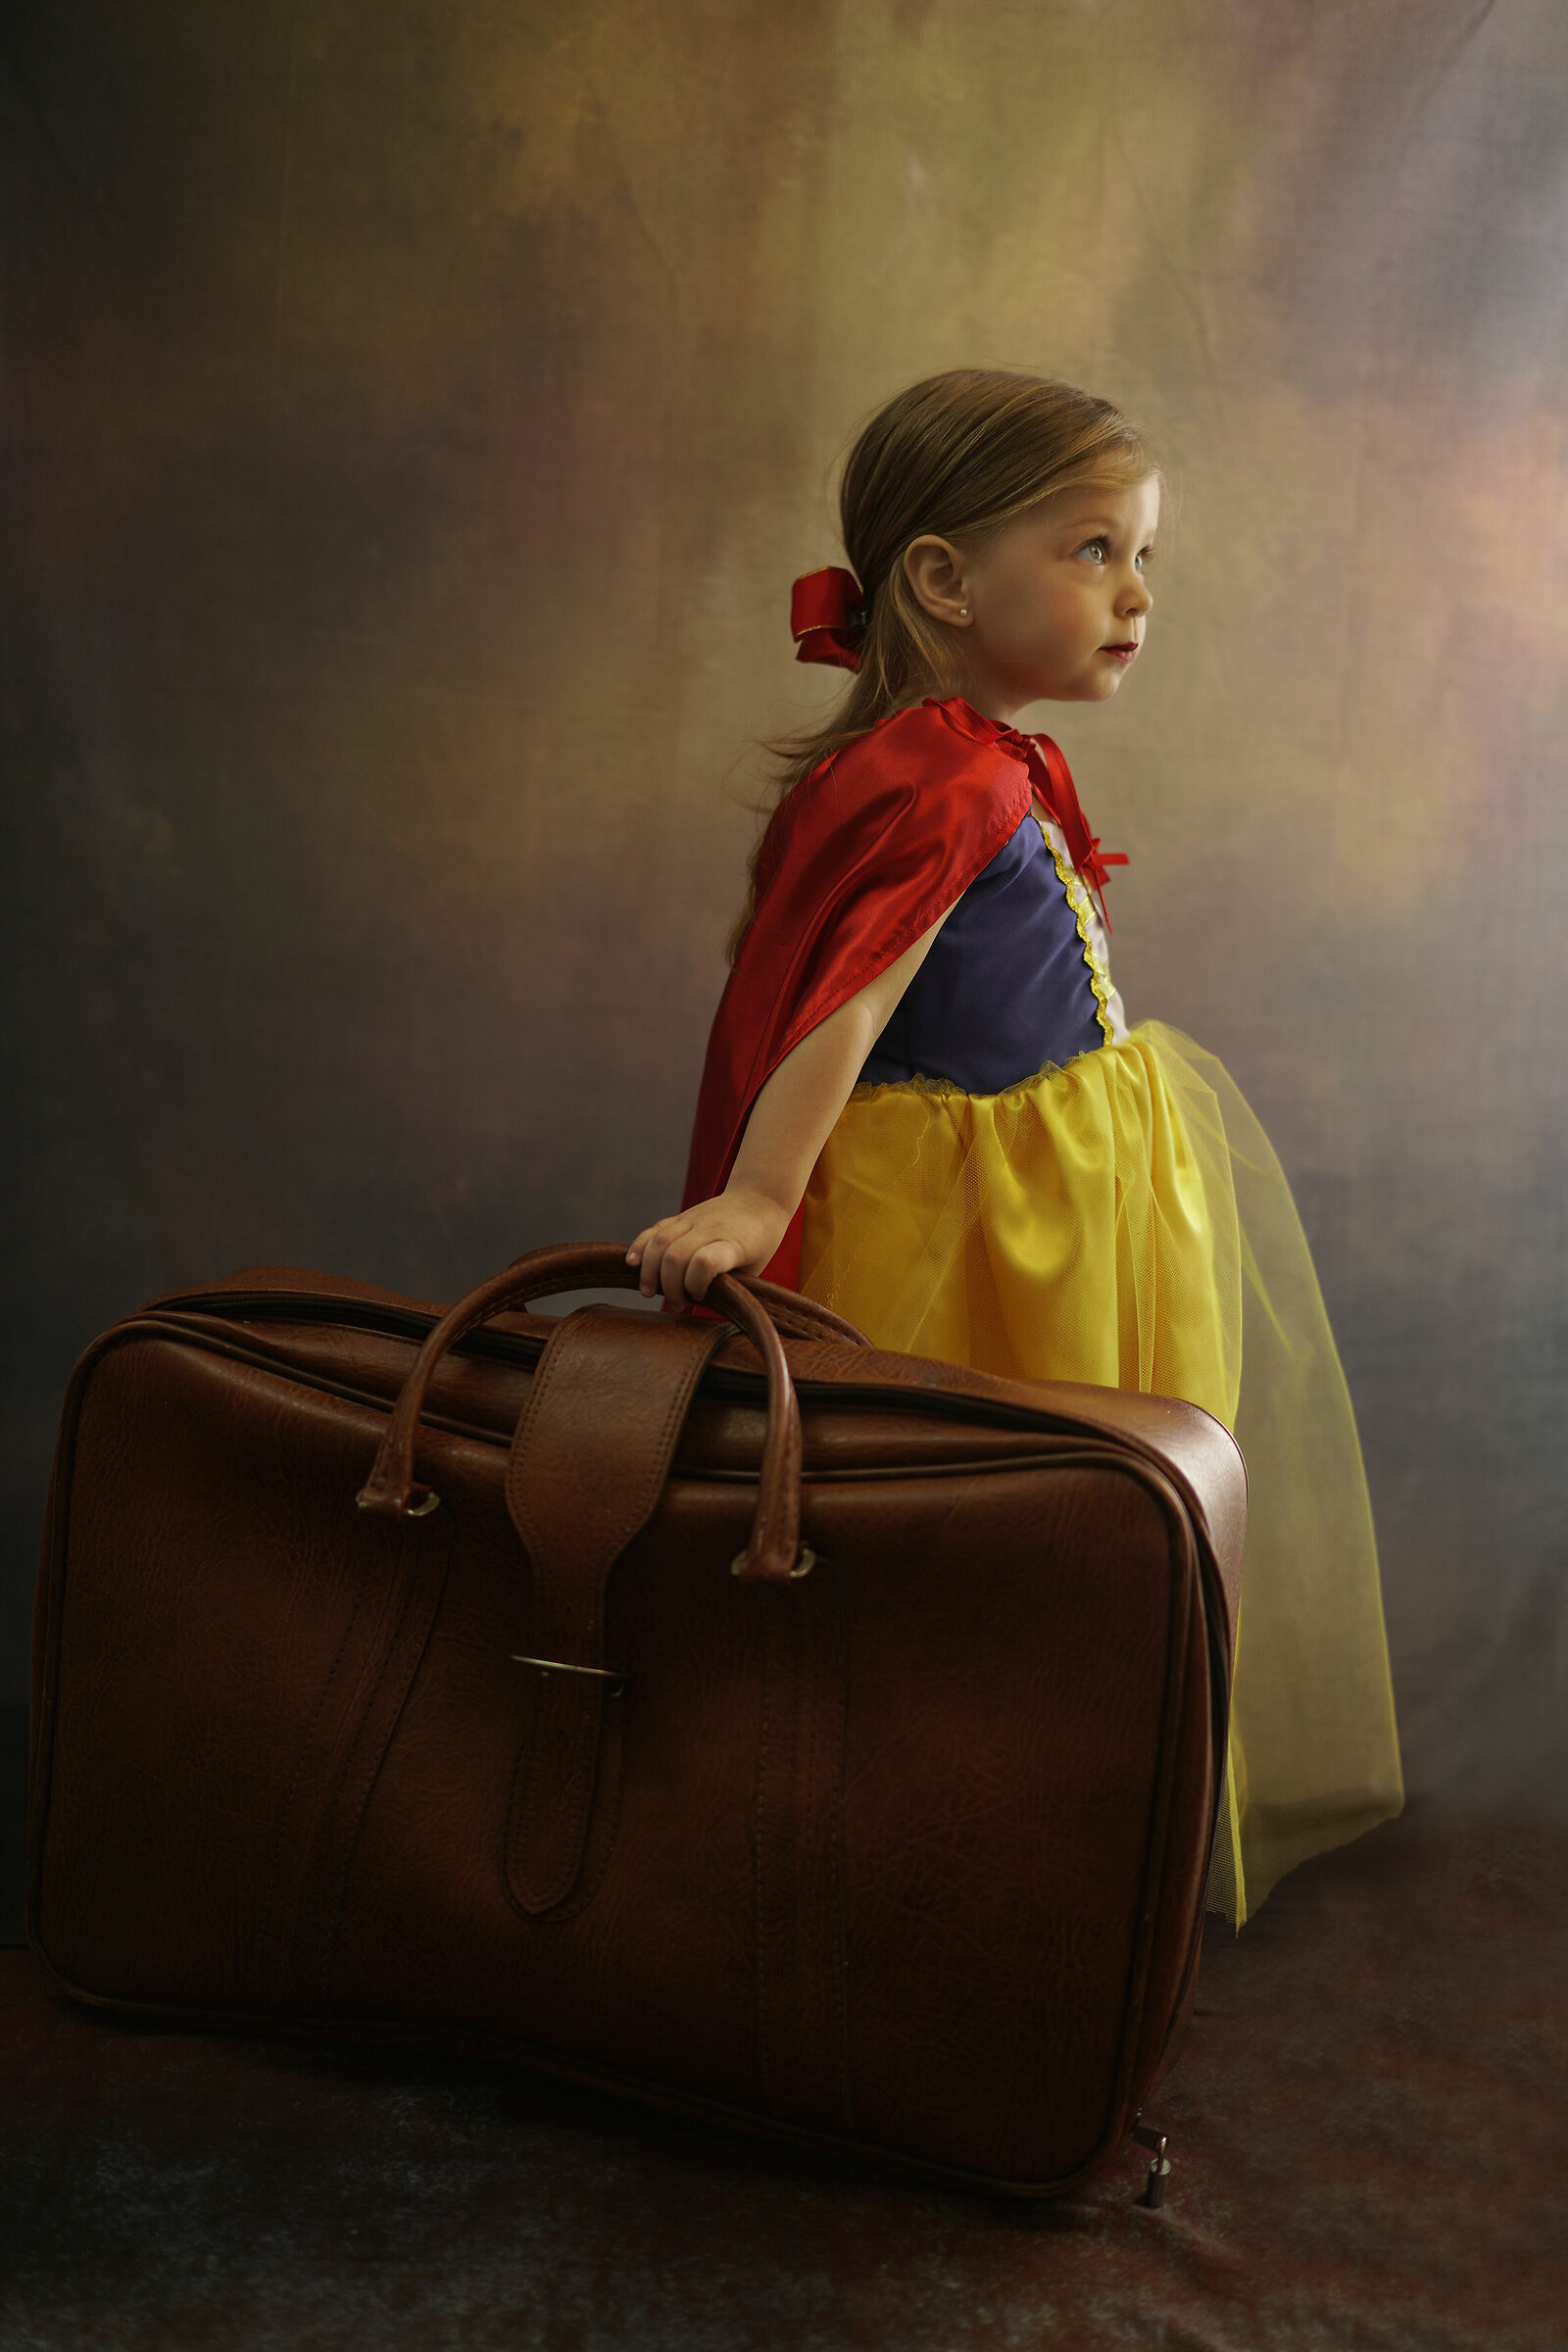 Snow White's suitcase ...